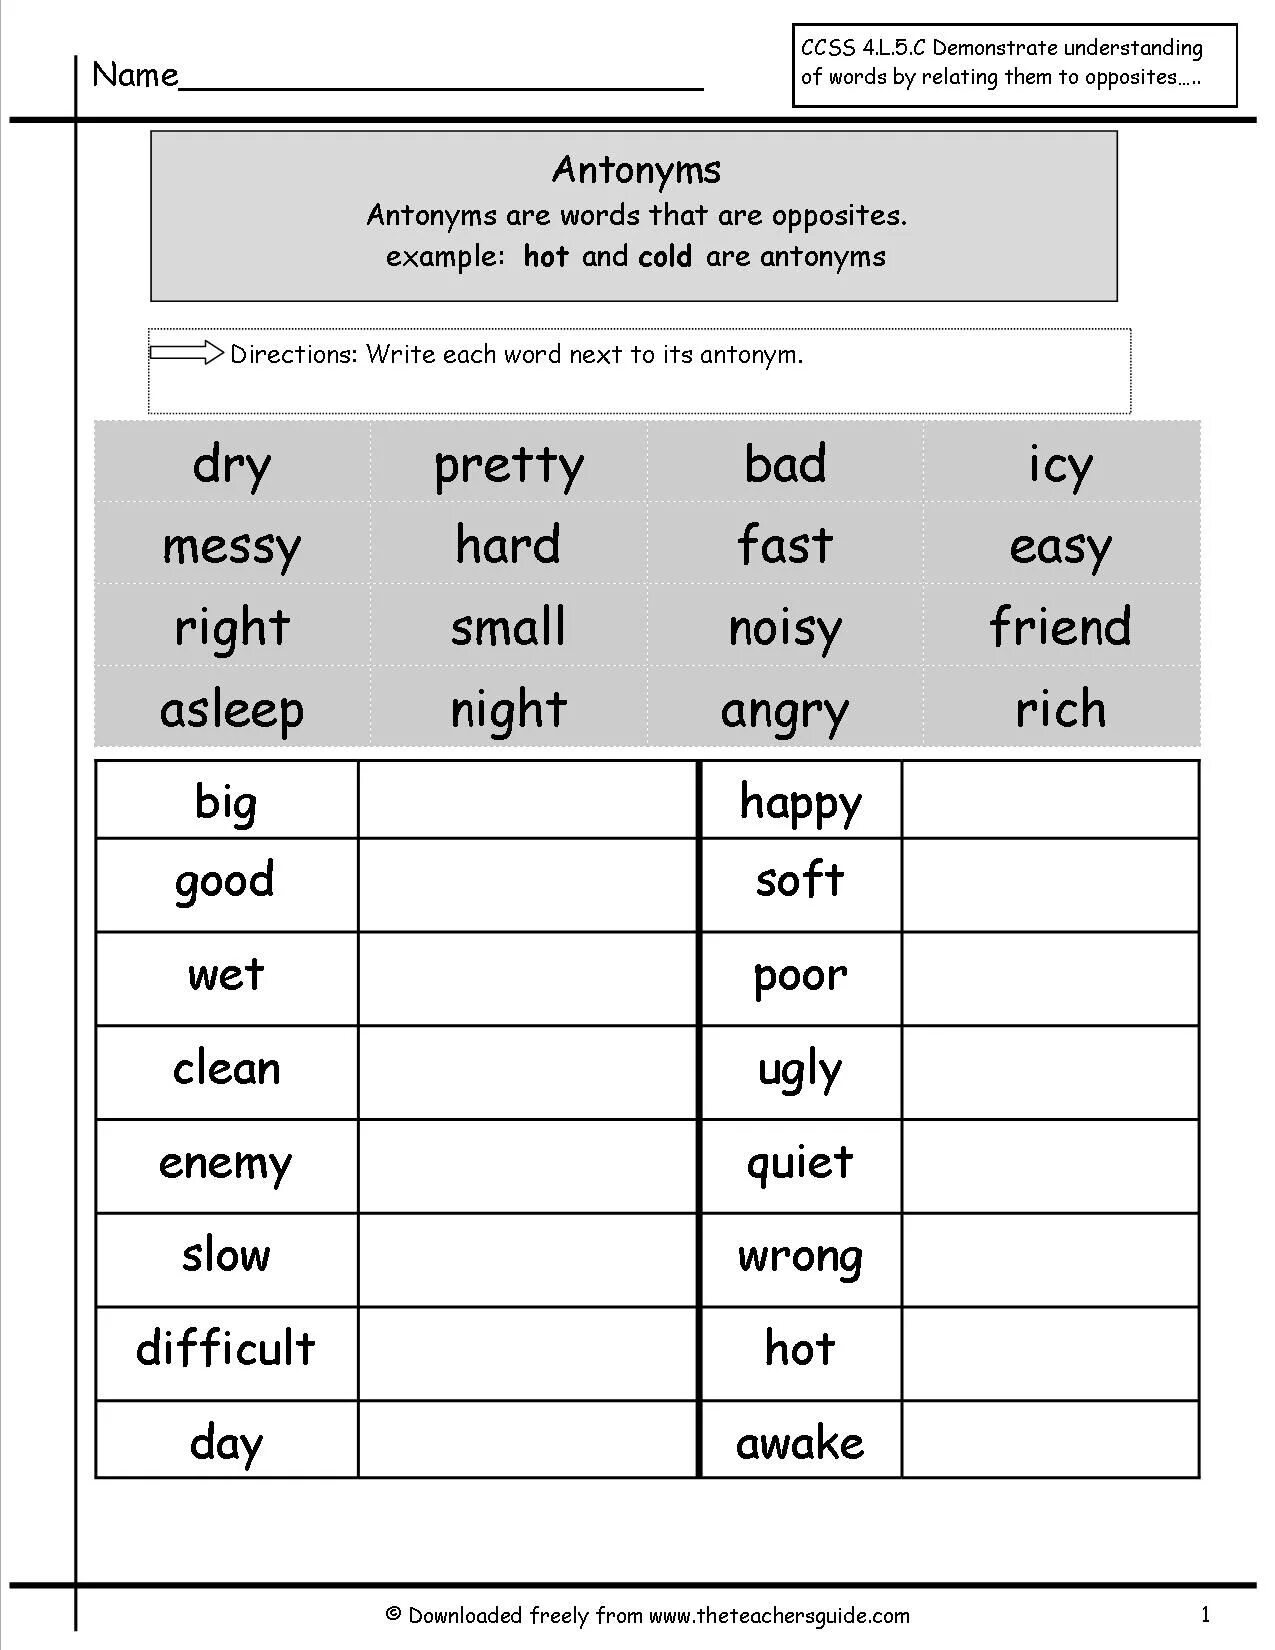 Synonyms and antonyms Worksheets. Adjectives antonyms Worksheets. Synonyms adjectives Worksheets. Антонимы на английском упражнения.